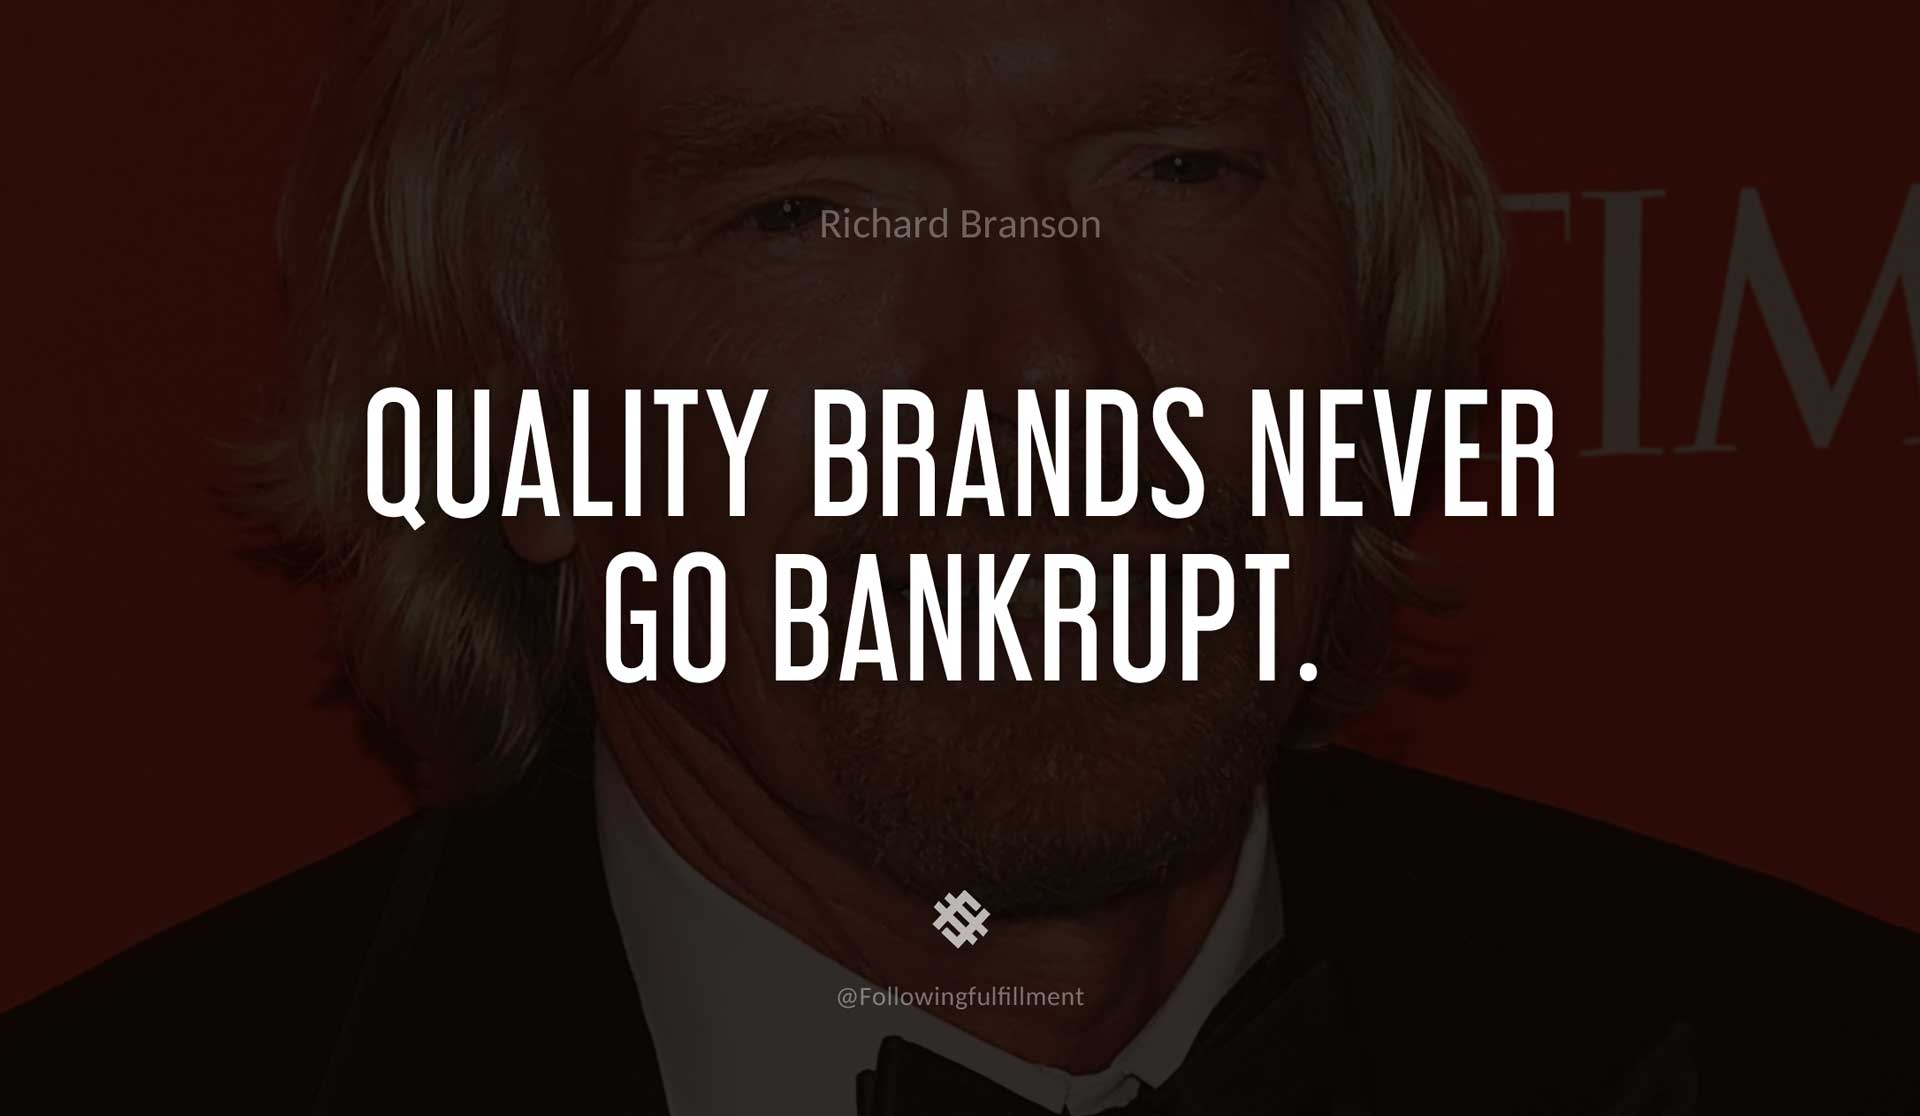 Quality-brands-never-go-bankrupt.-RICHARD-BRANSON-Quote.jpg